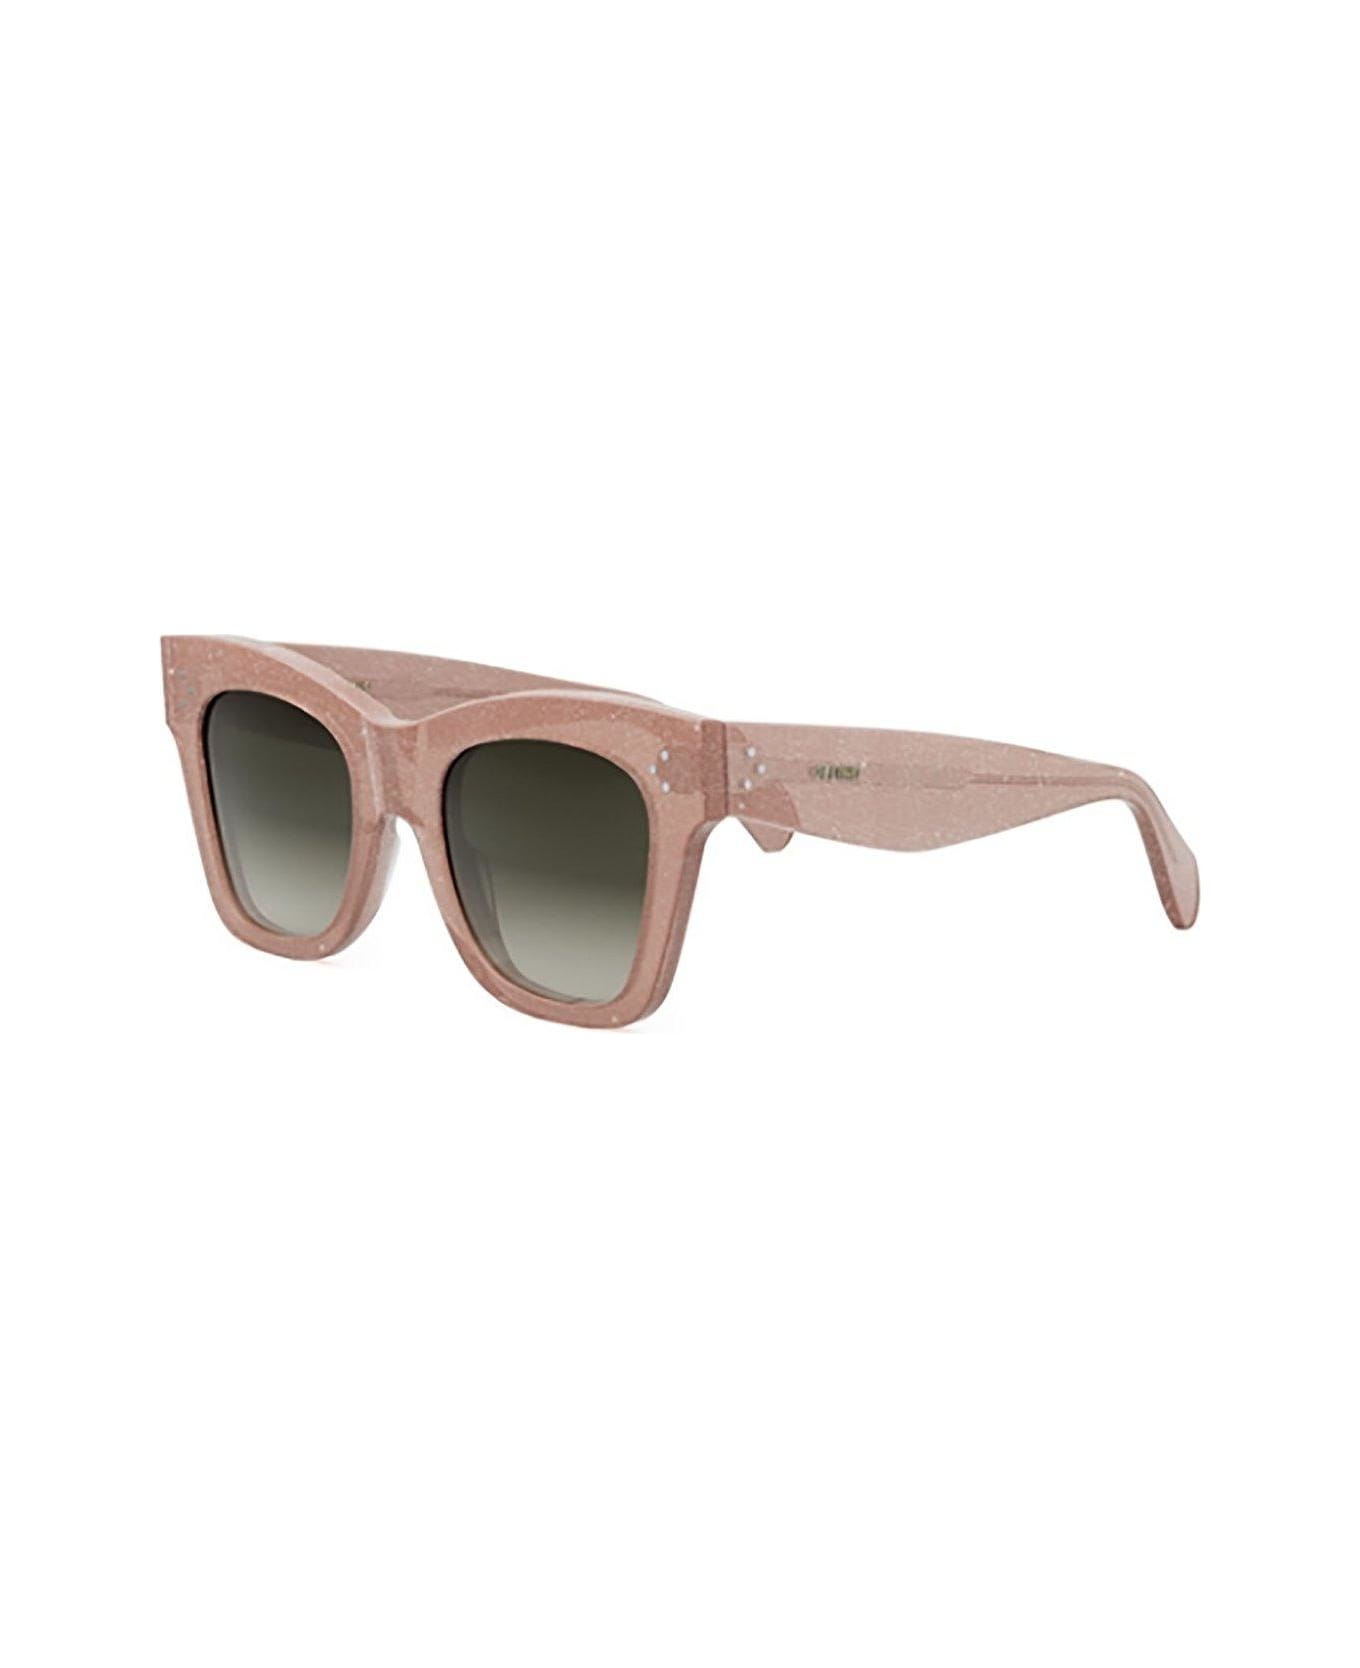 Celine Square Frame Sunglasses - 74f サングラス